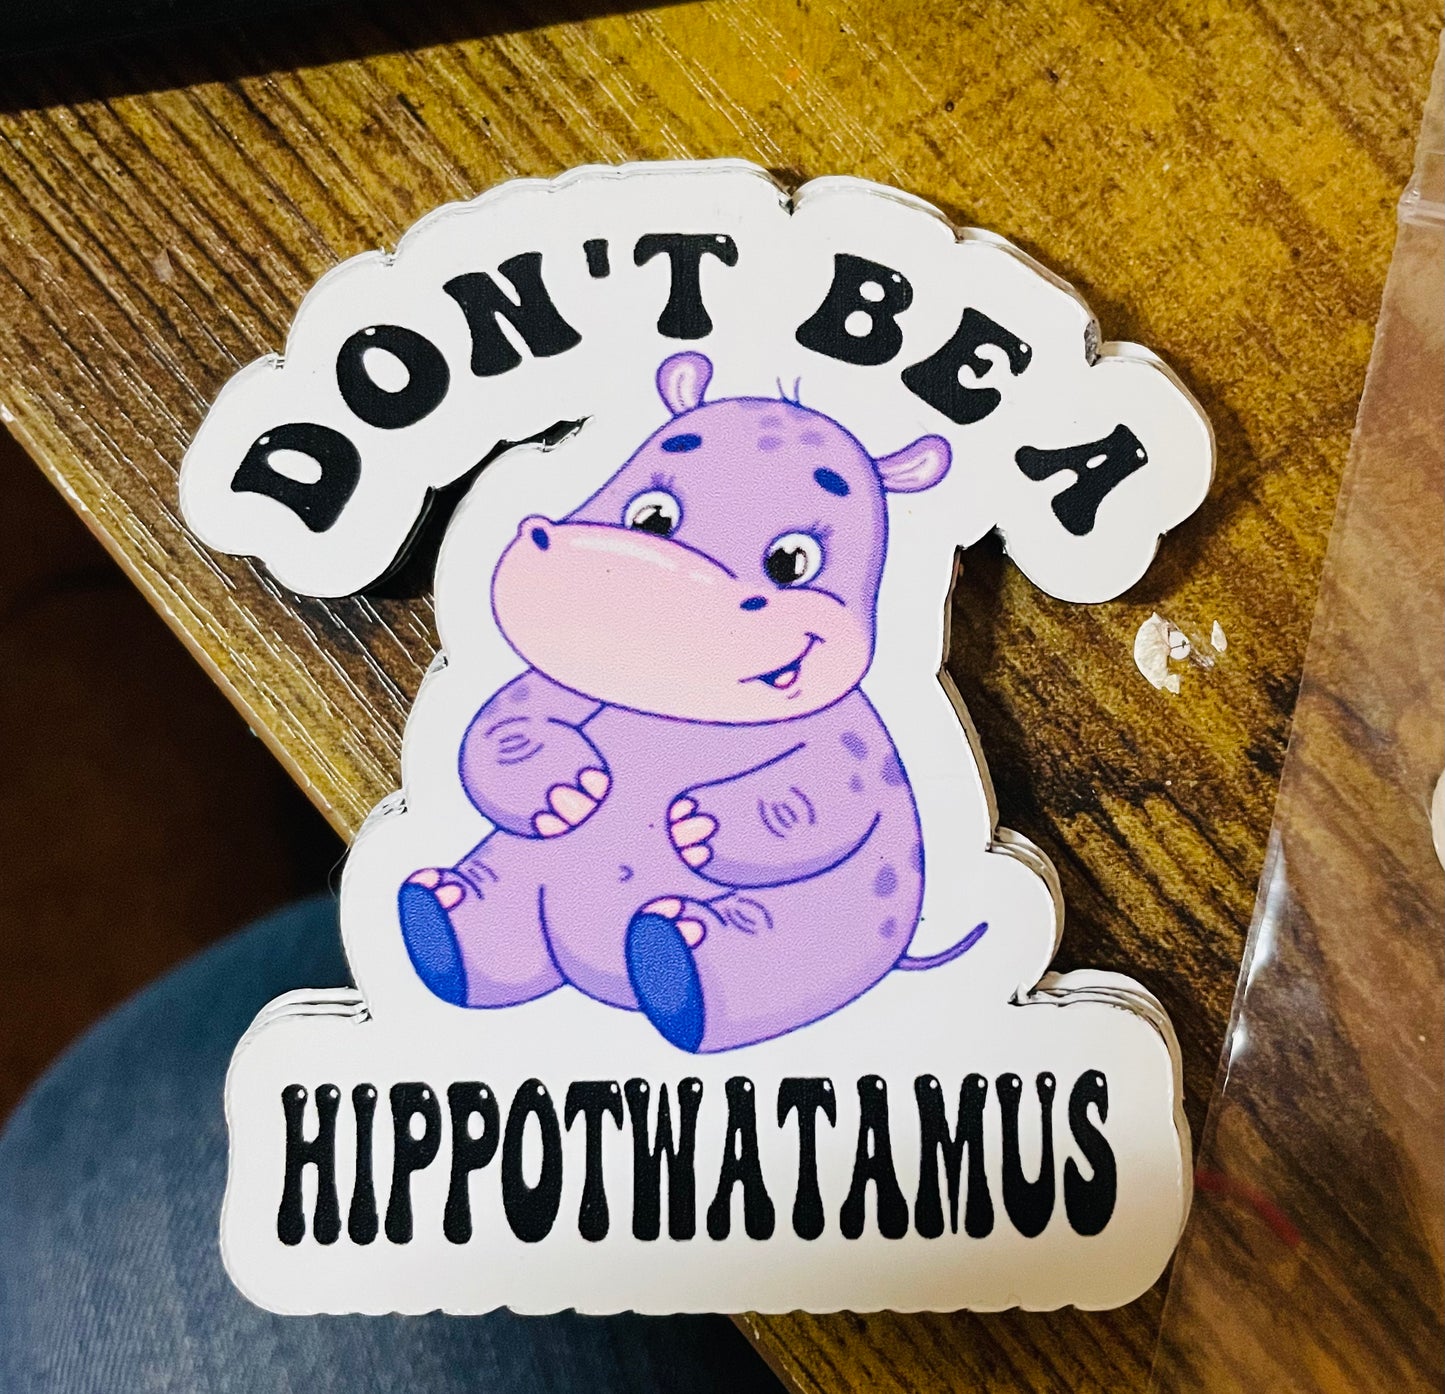 Don’t be a Hippotwatamus